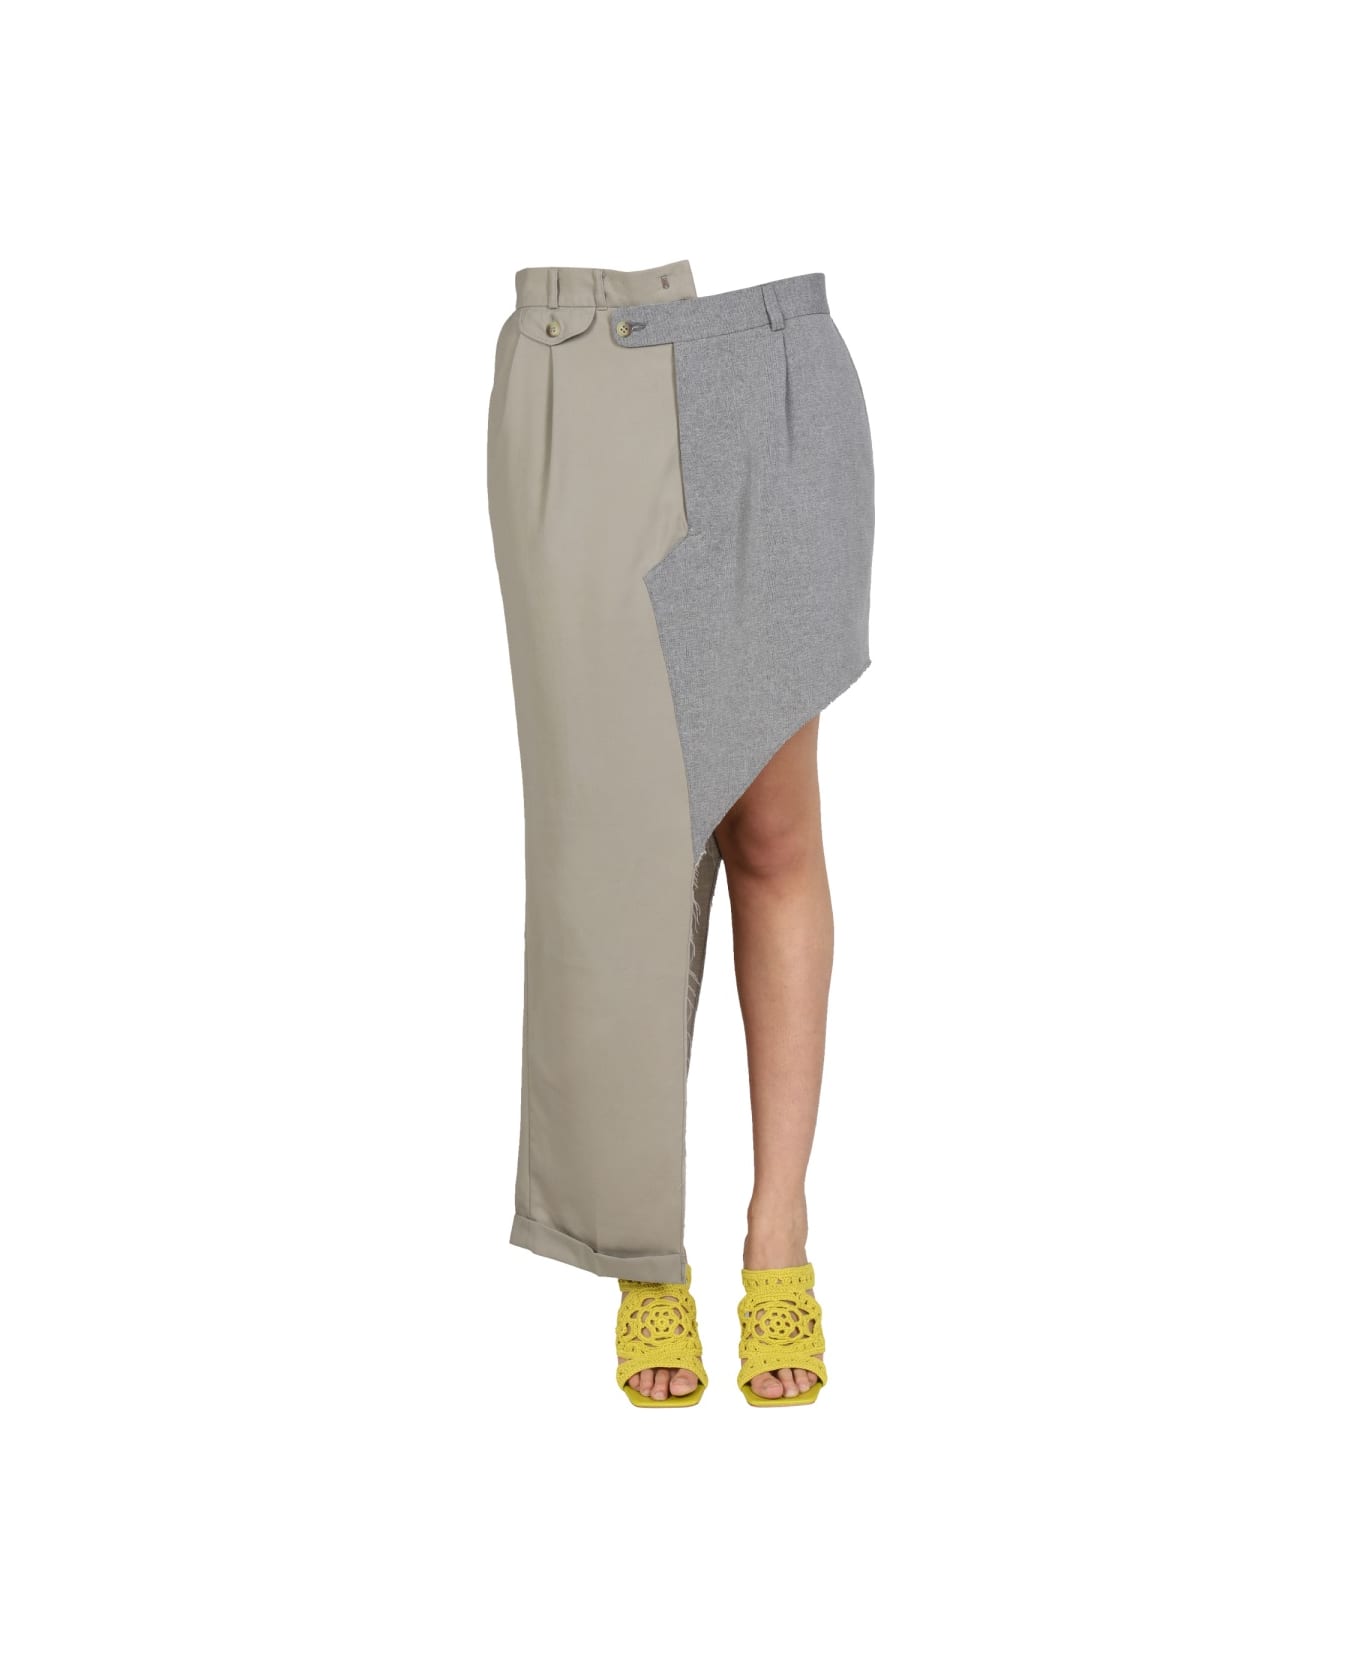 1/OFF Pants Skirt - MULTICOLOUR